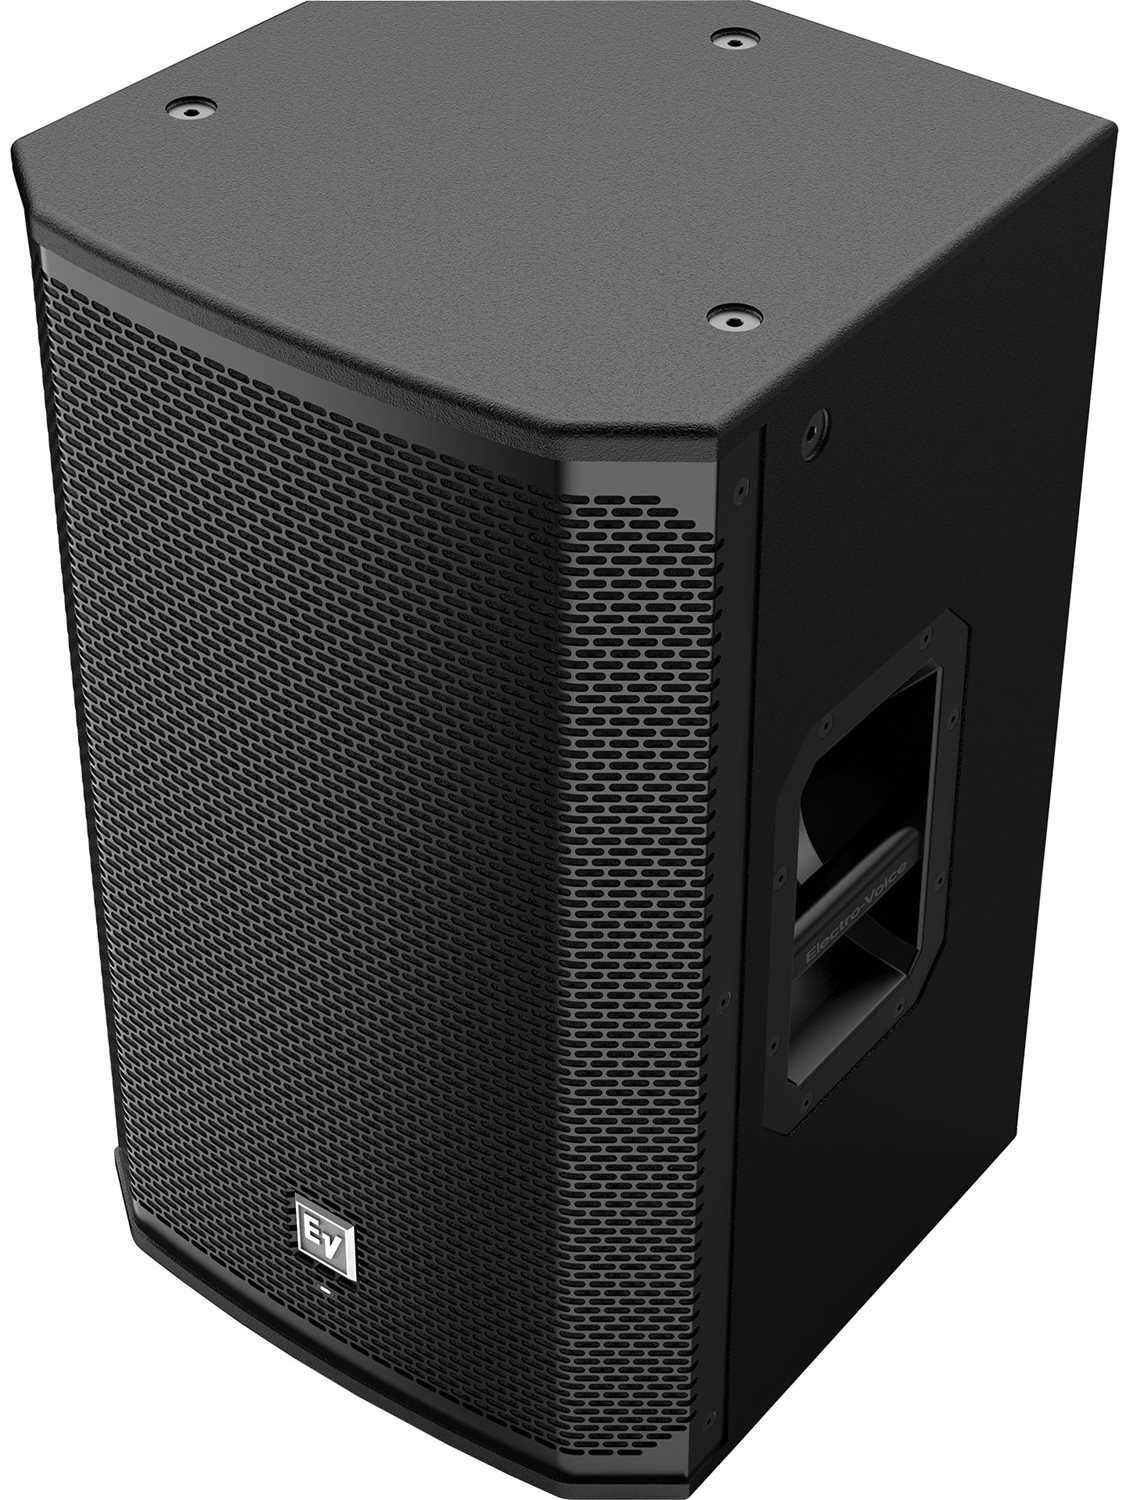 Electro-Voice EKX-12P 12-Inch Powered Speaker - ProSound and Stage Lighting